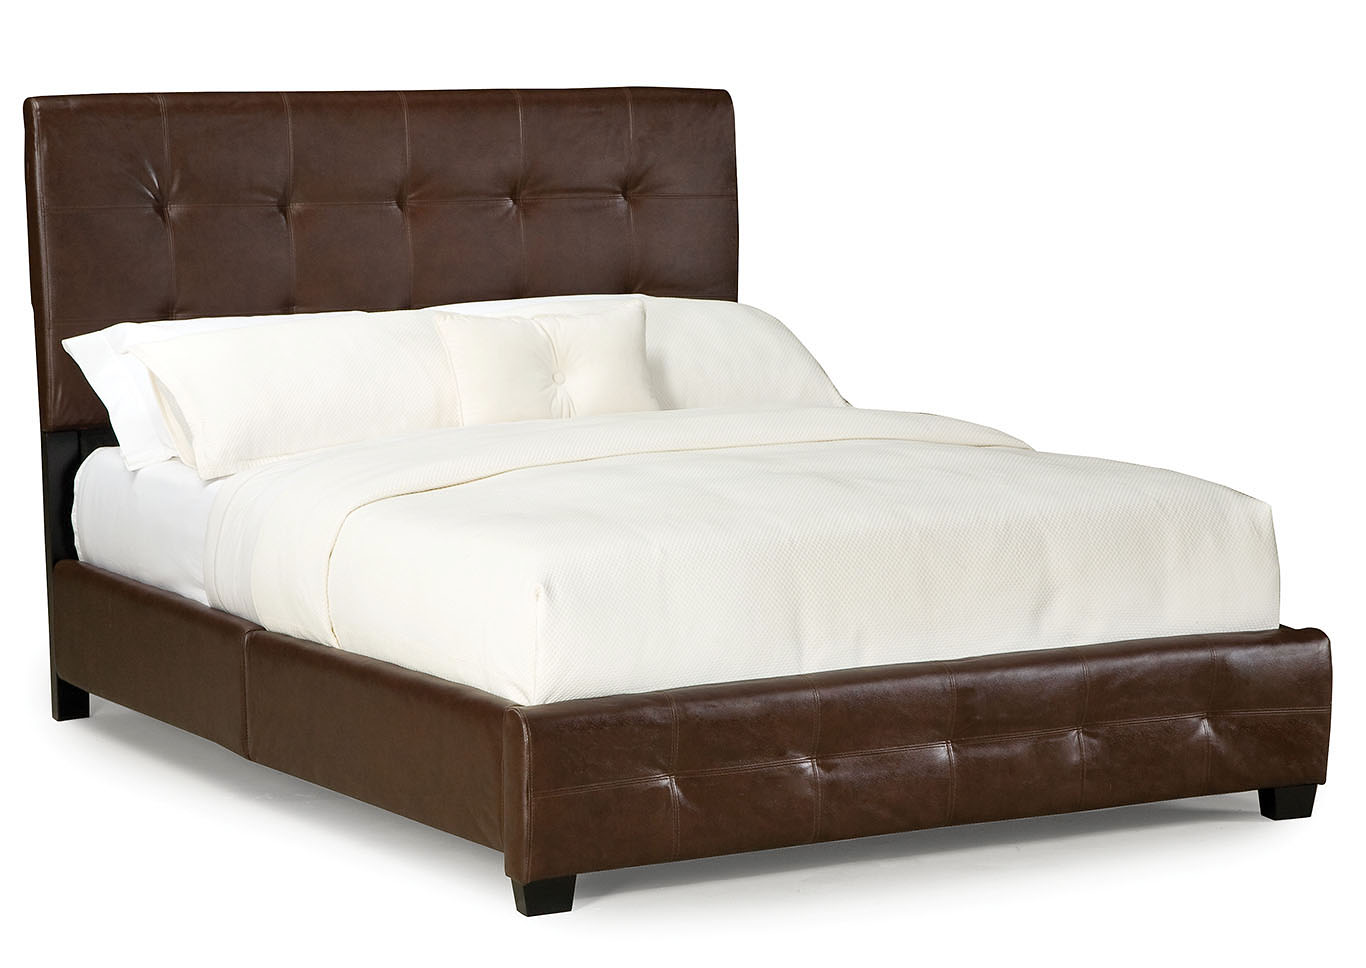 Madison Square Brown Queen Upholstered Platform Bed,Standard